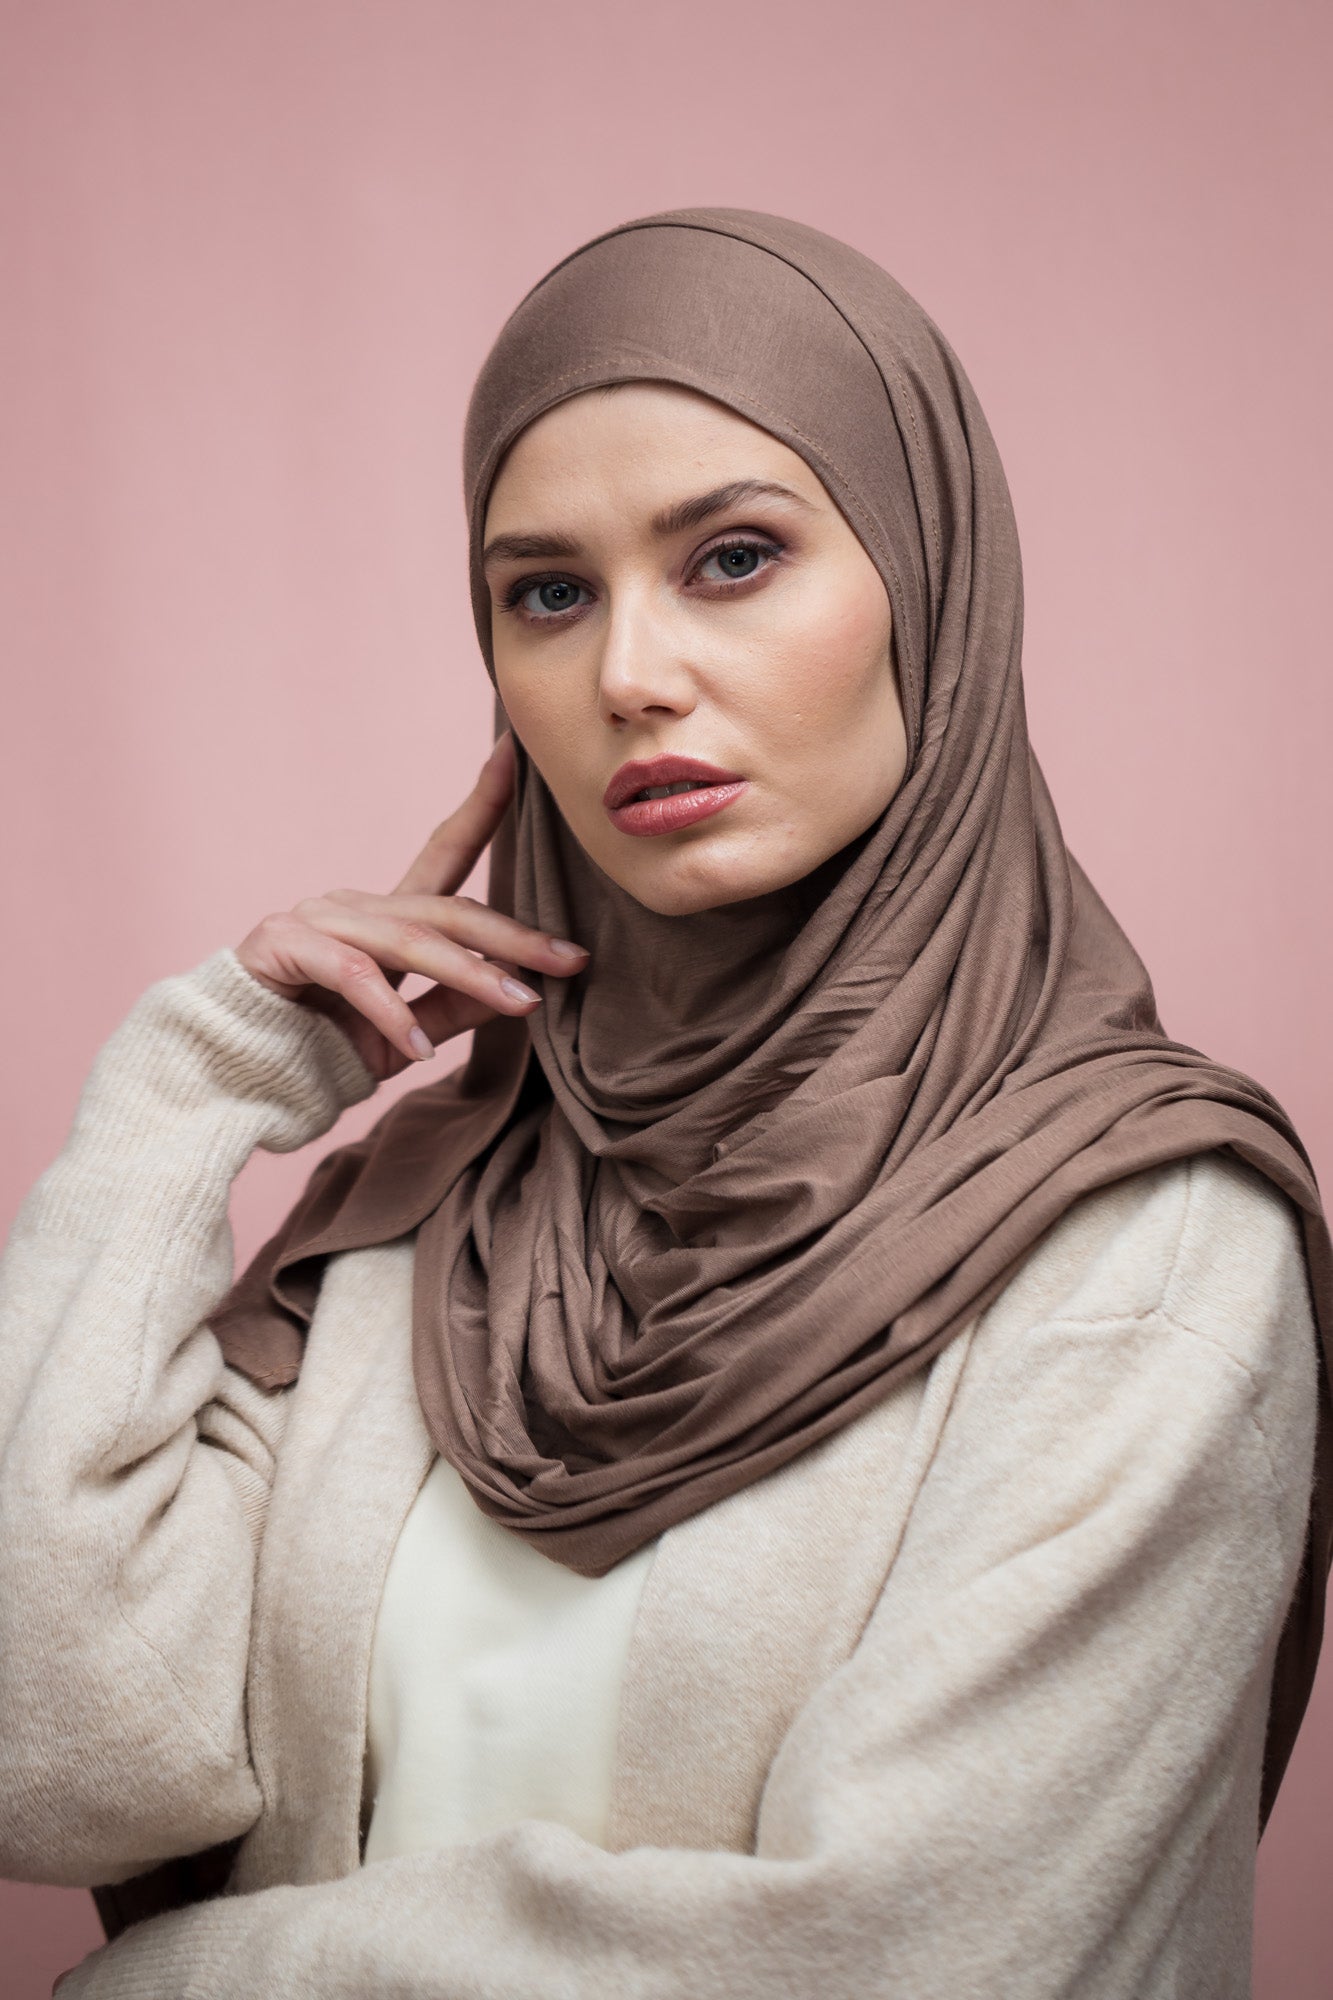 The Caramel Jersey Hijab Scarf